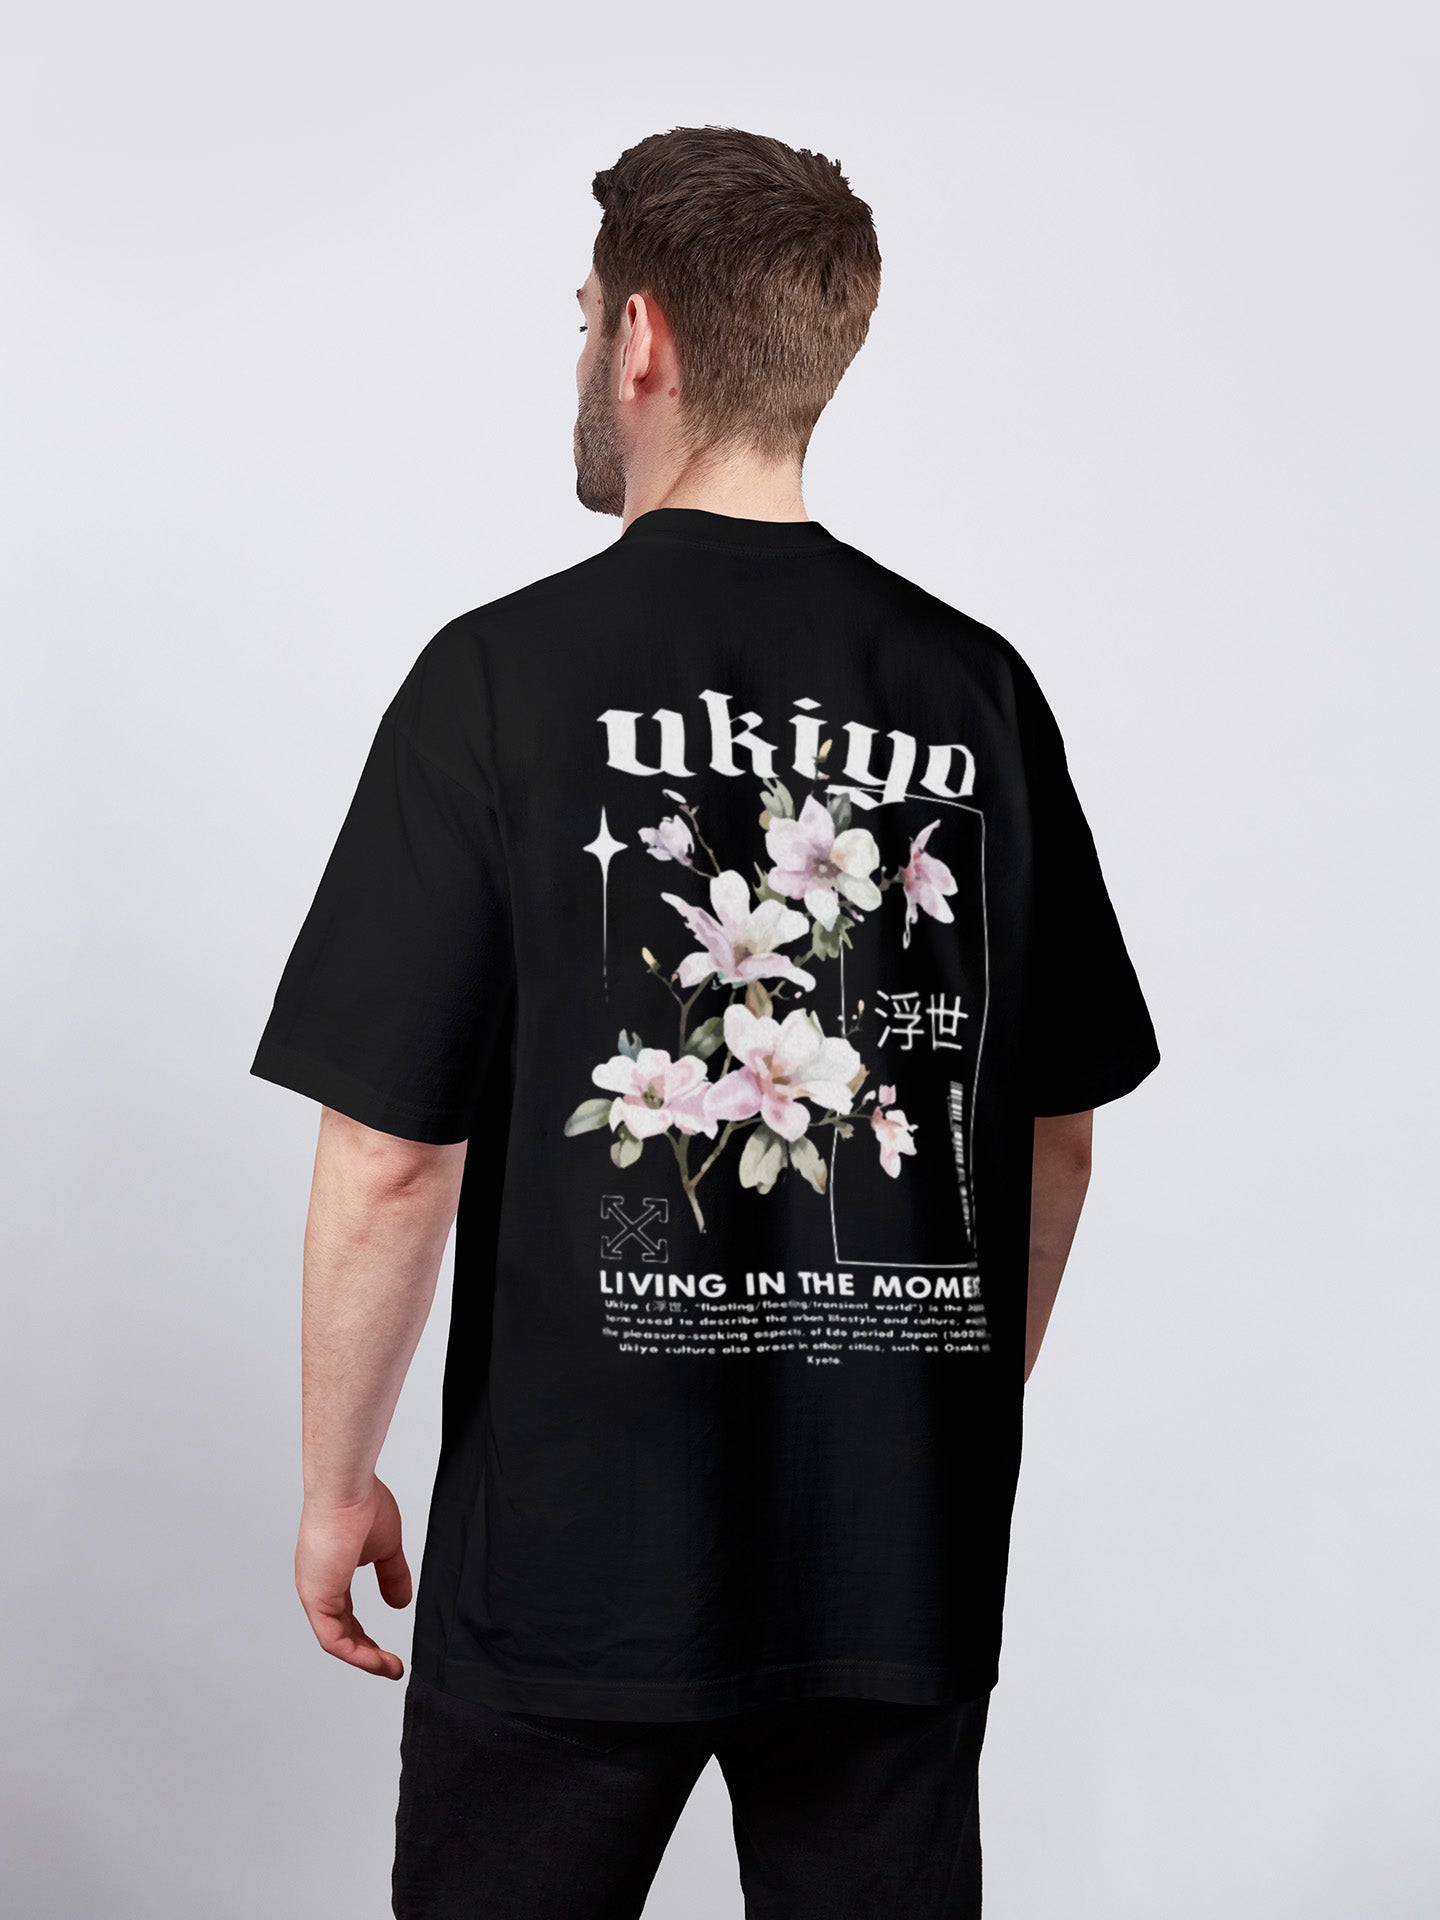 Ukiyo Back T-Shirt